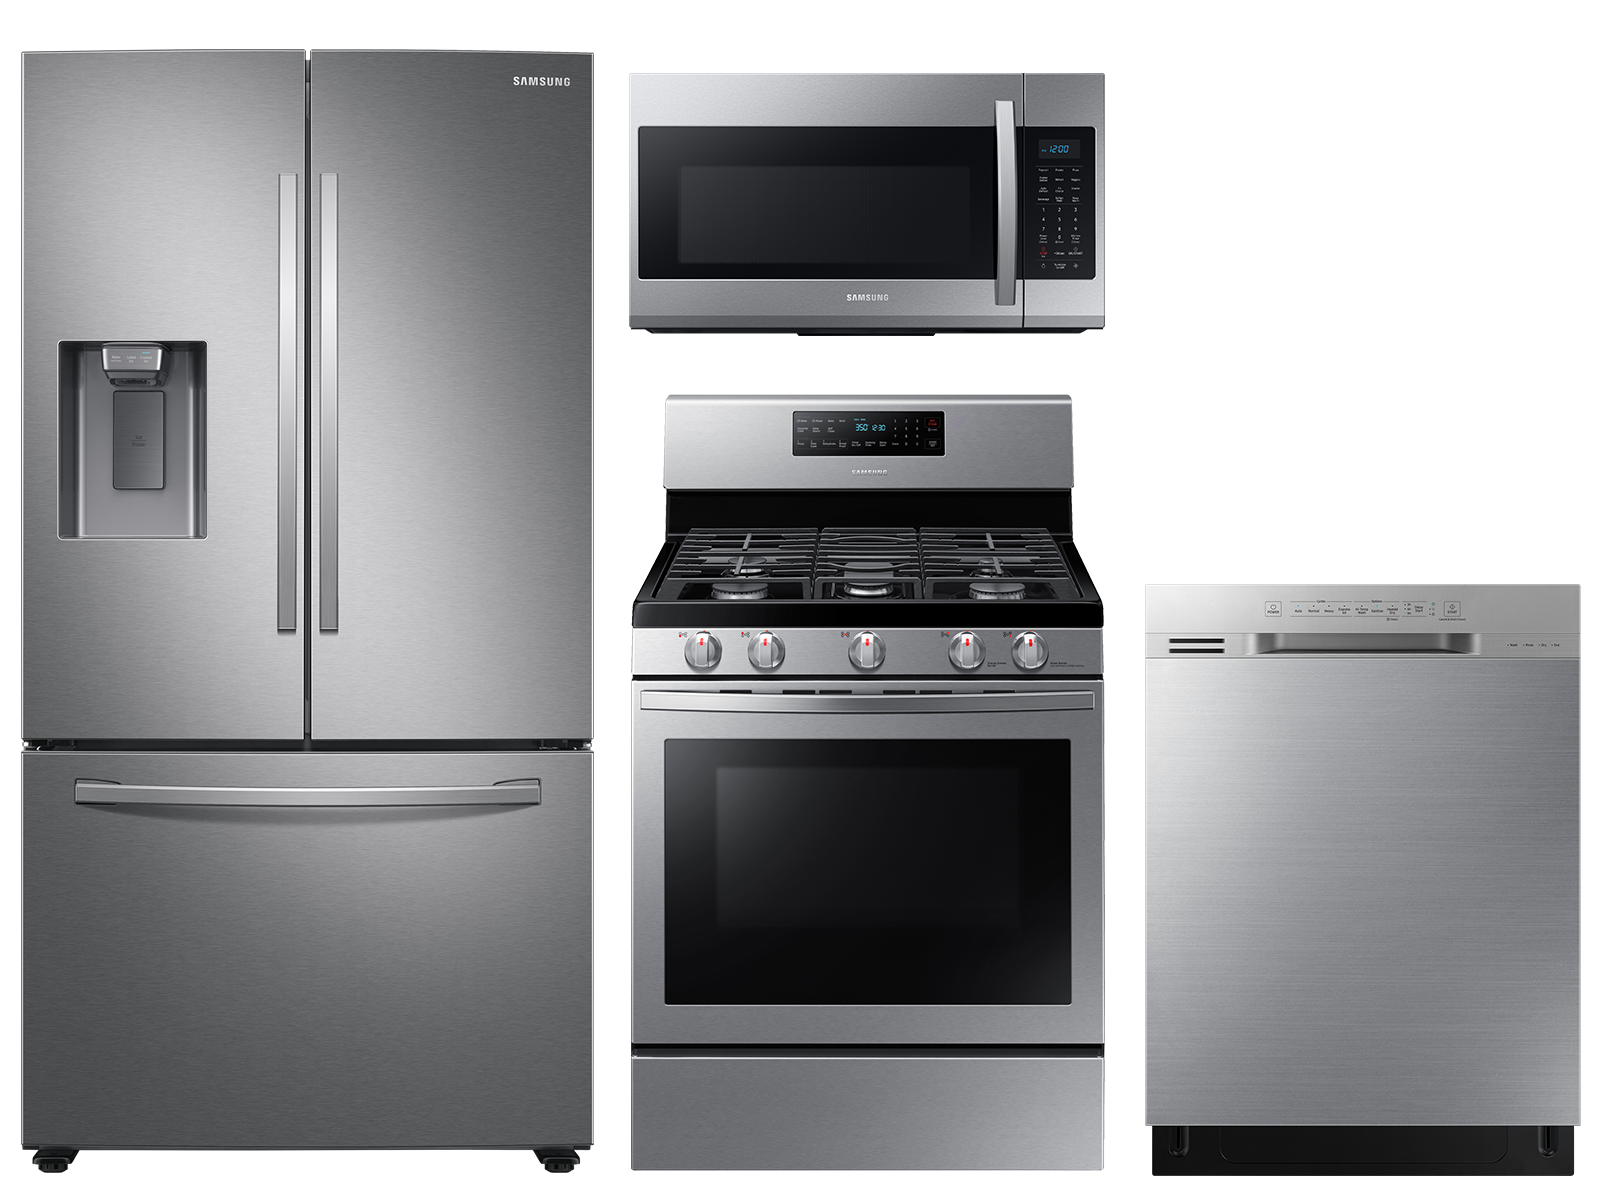 Samsung Large capacity 3-door refrigerator & gas range package in Stainless Stainless(BNDL-1646991127011)